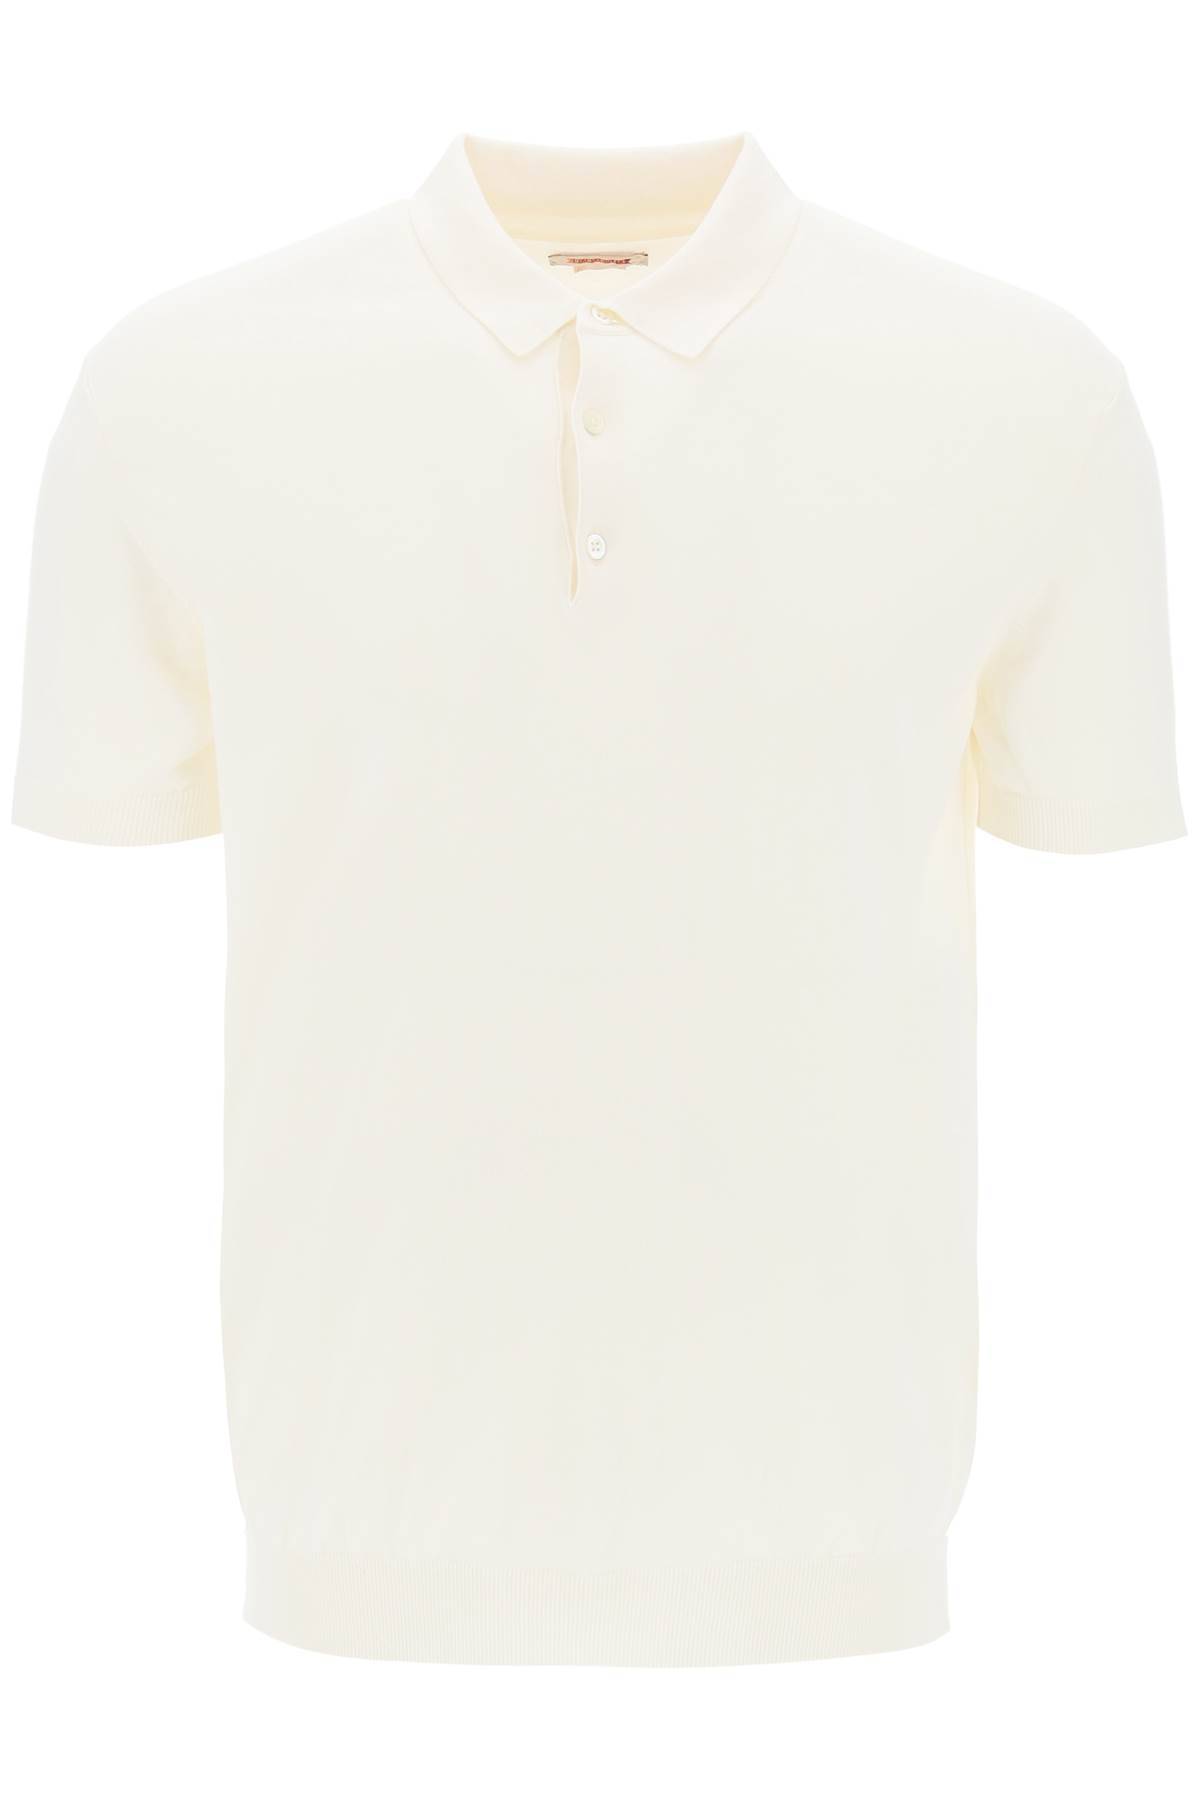 Baracuta BARACUTA short-sleeved cotton polo shirt for